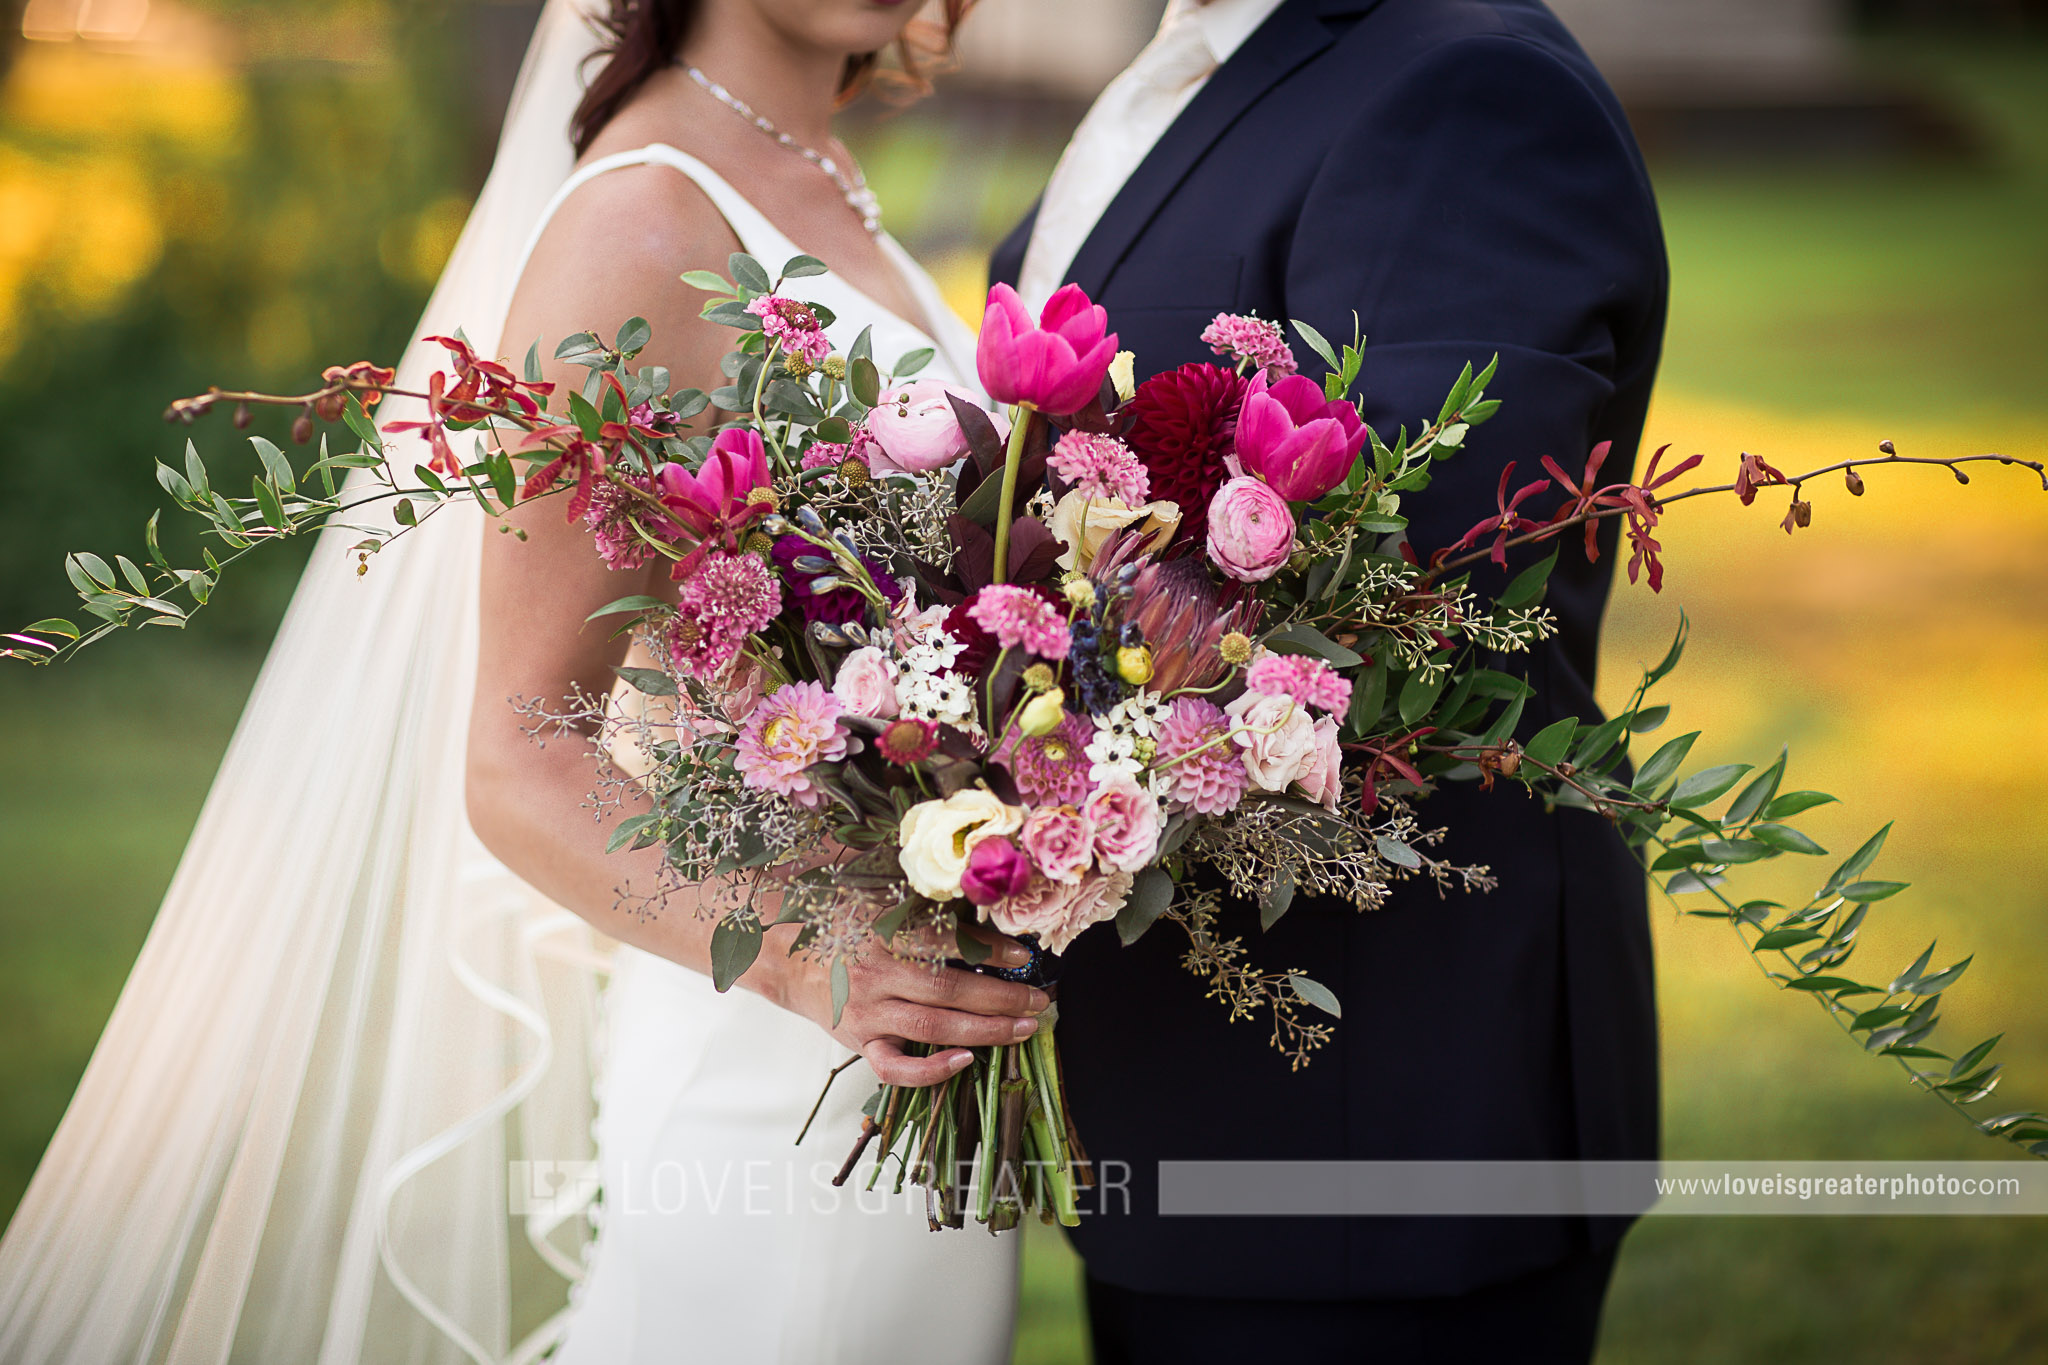 GardenView Flowers—Toledo Area Wedding Flowers, U-Pick Flower